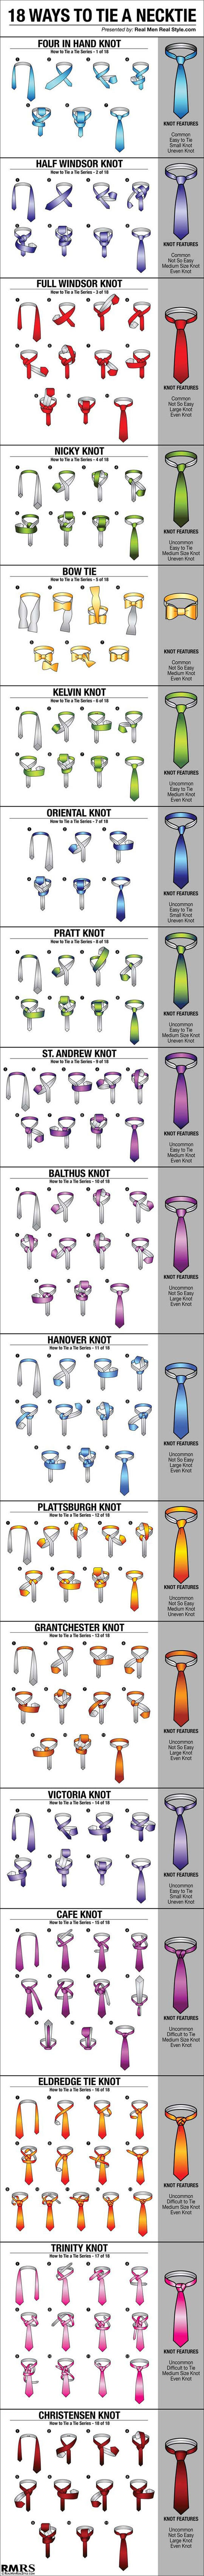 cool-guide-tie-necktie-ways